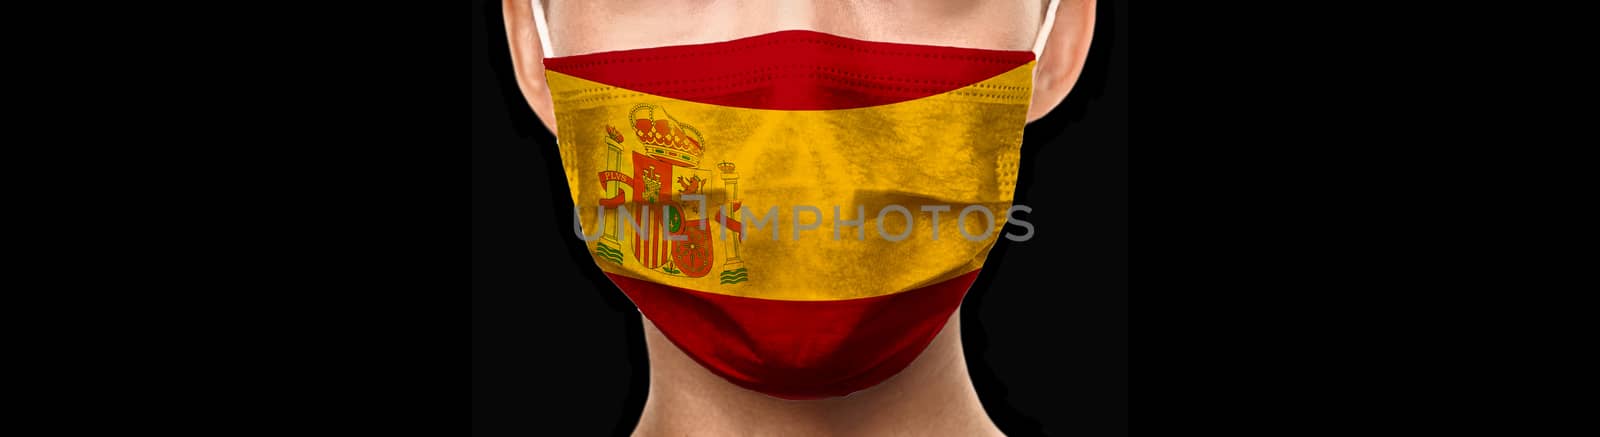 Spain flag doctor mask banner background for COVID-19 Coronavirus concept. Isolated on black.